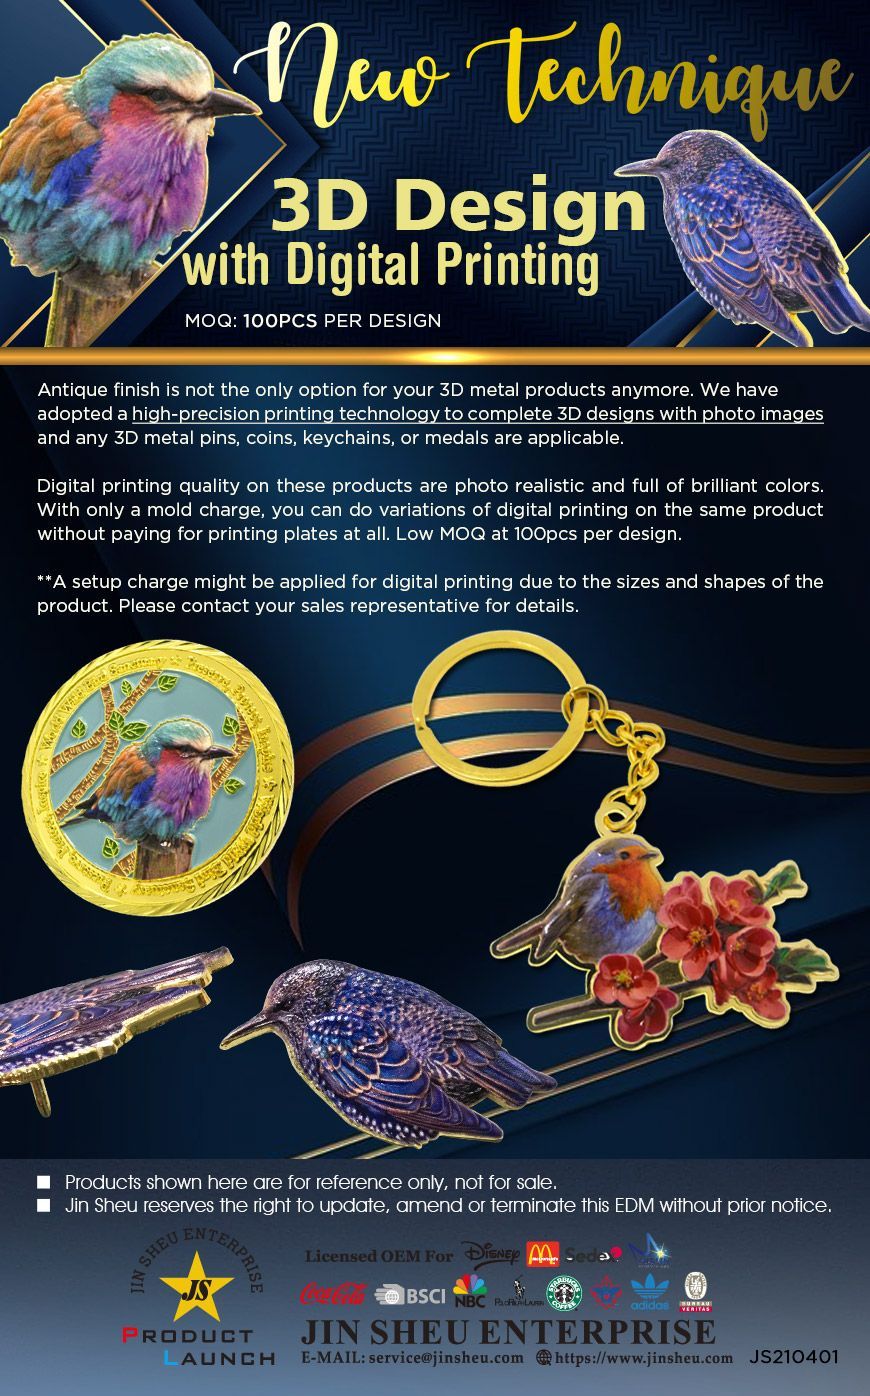 Maßgefertigte Metall-Souvenirs im 3D-Design mit digitalem Druck